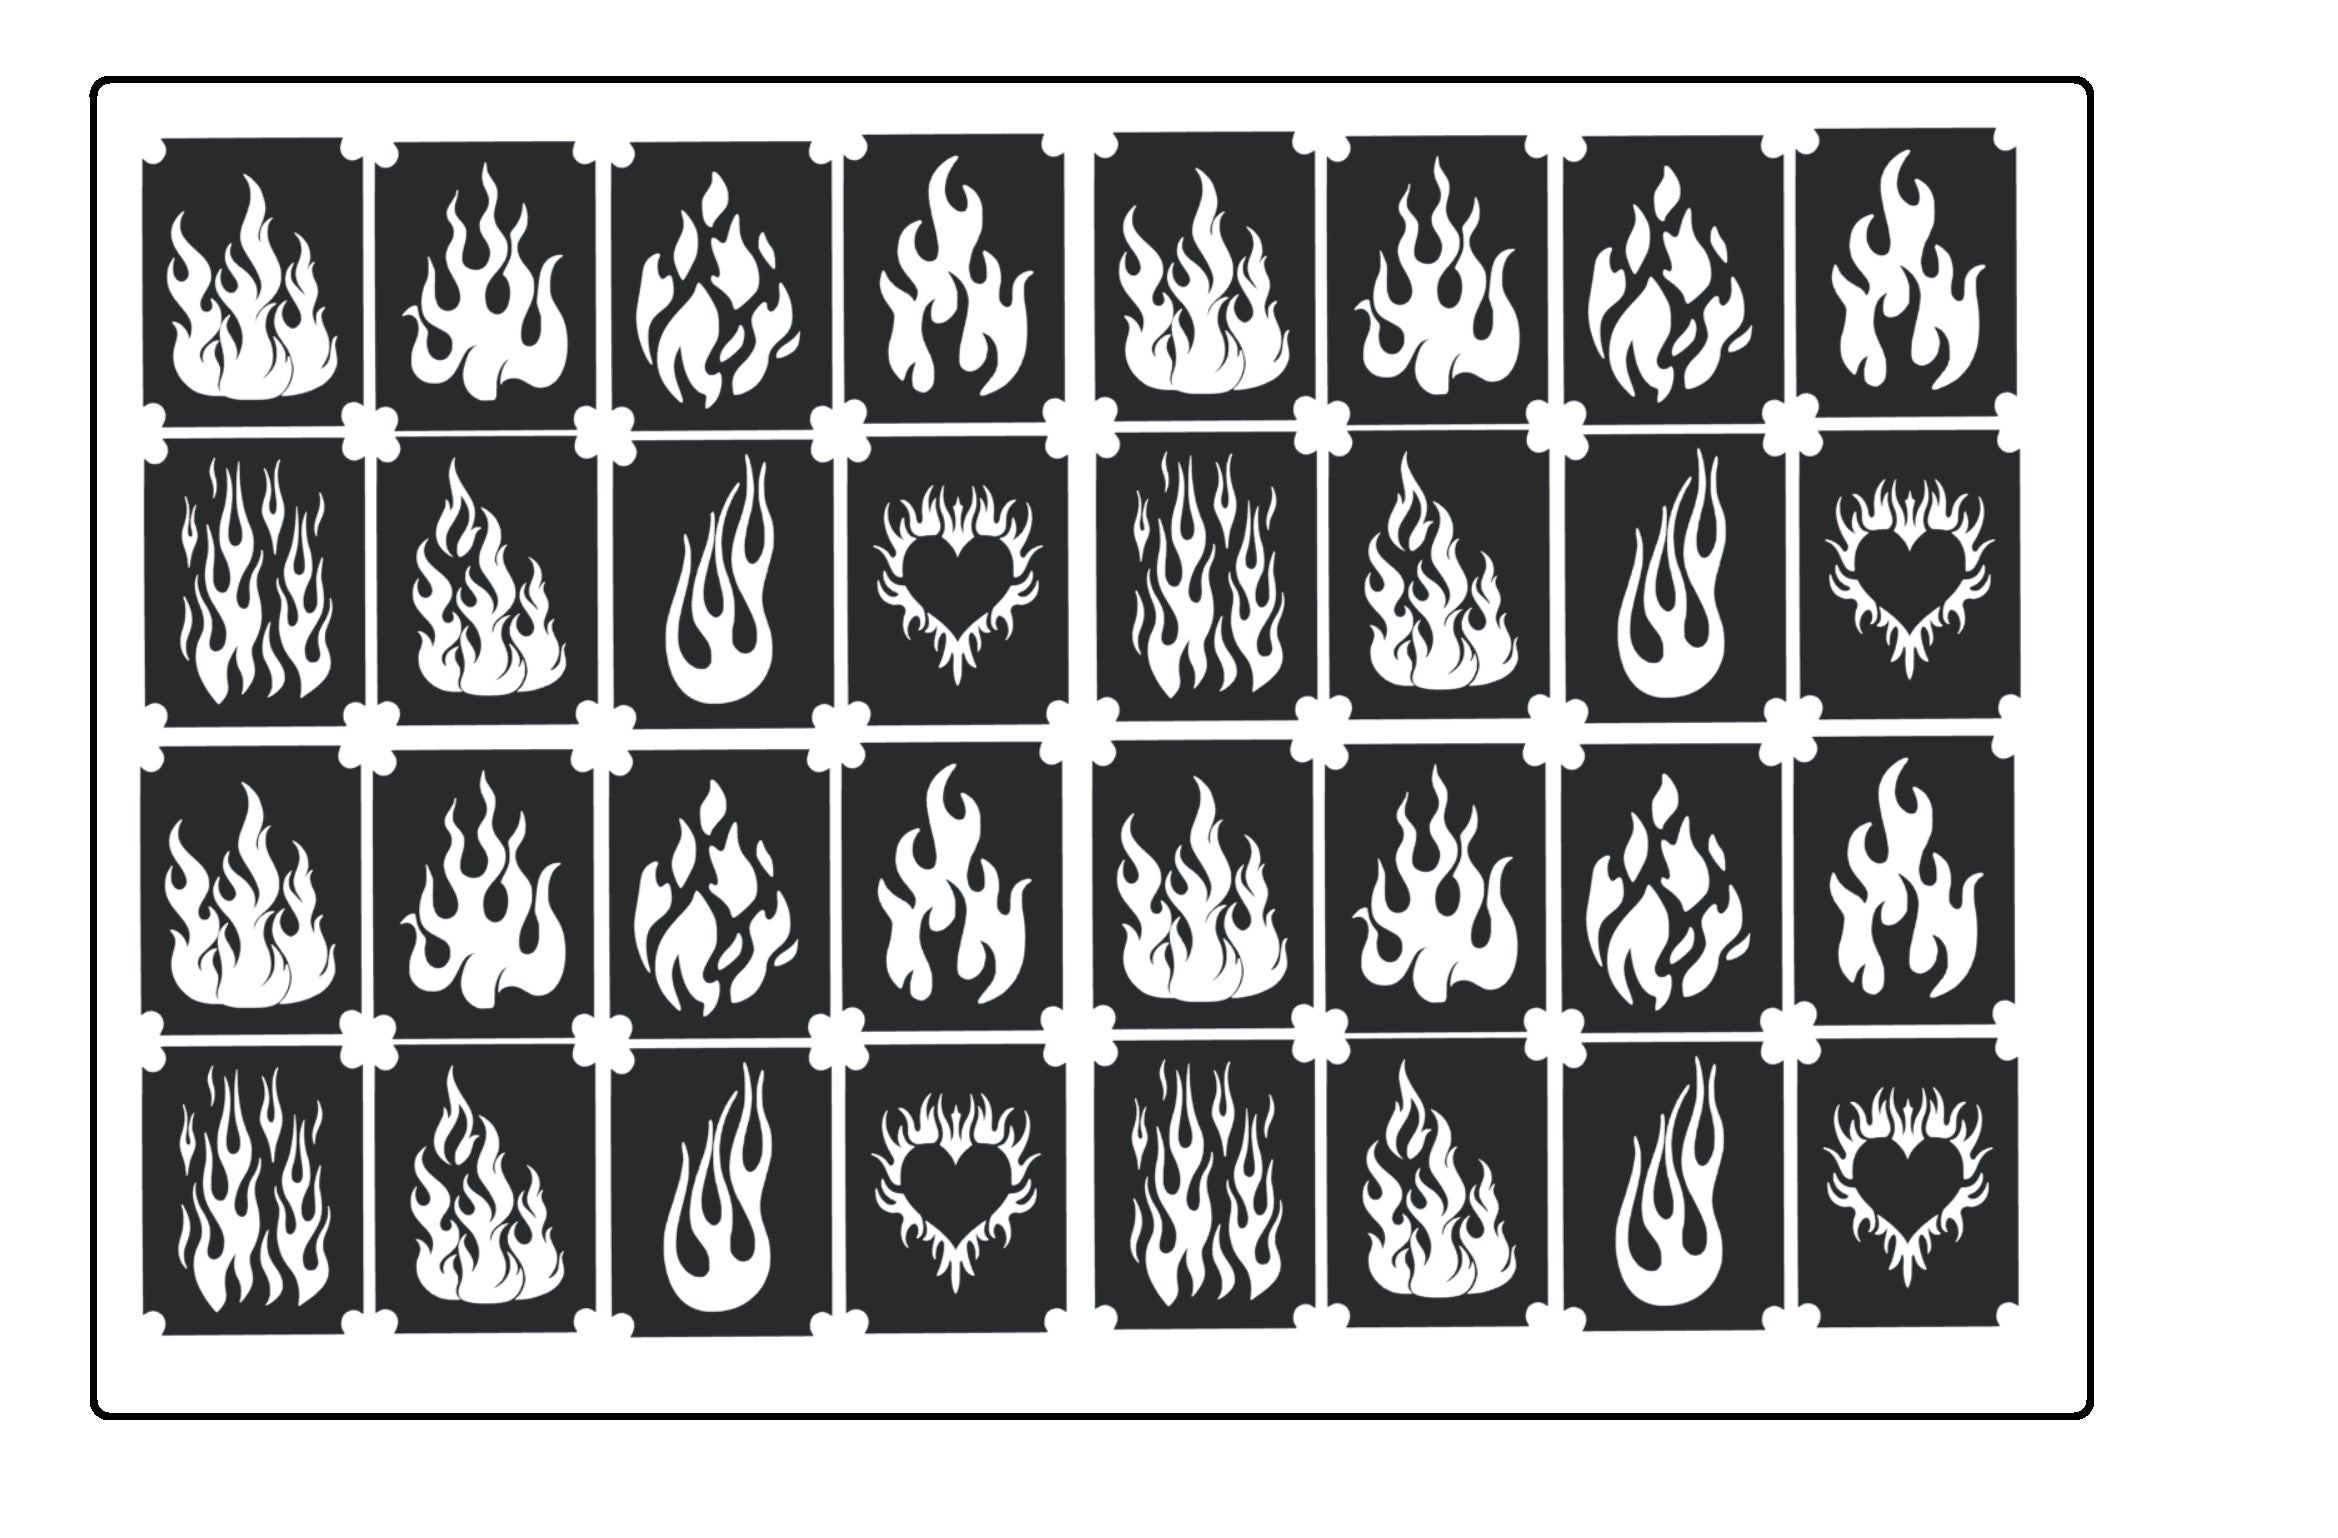 30 Flame Tattoo Design Stencils